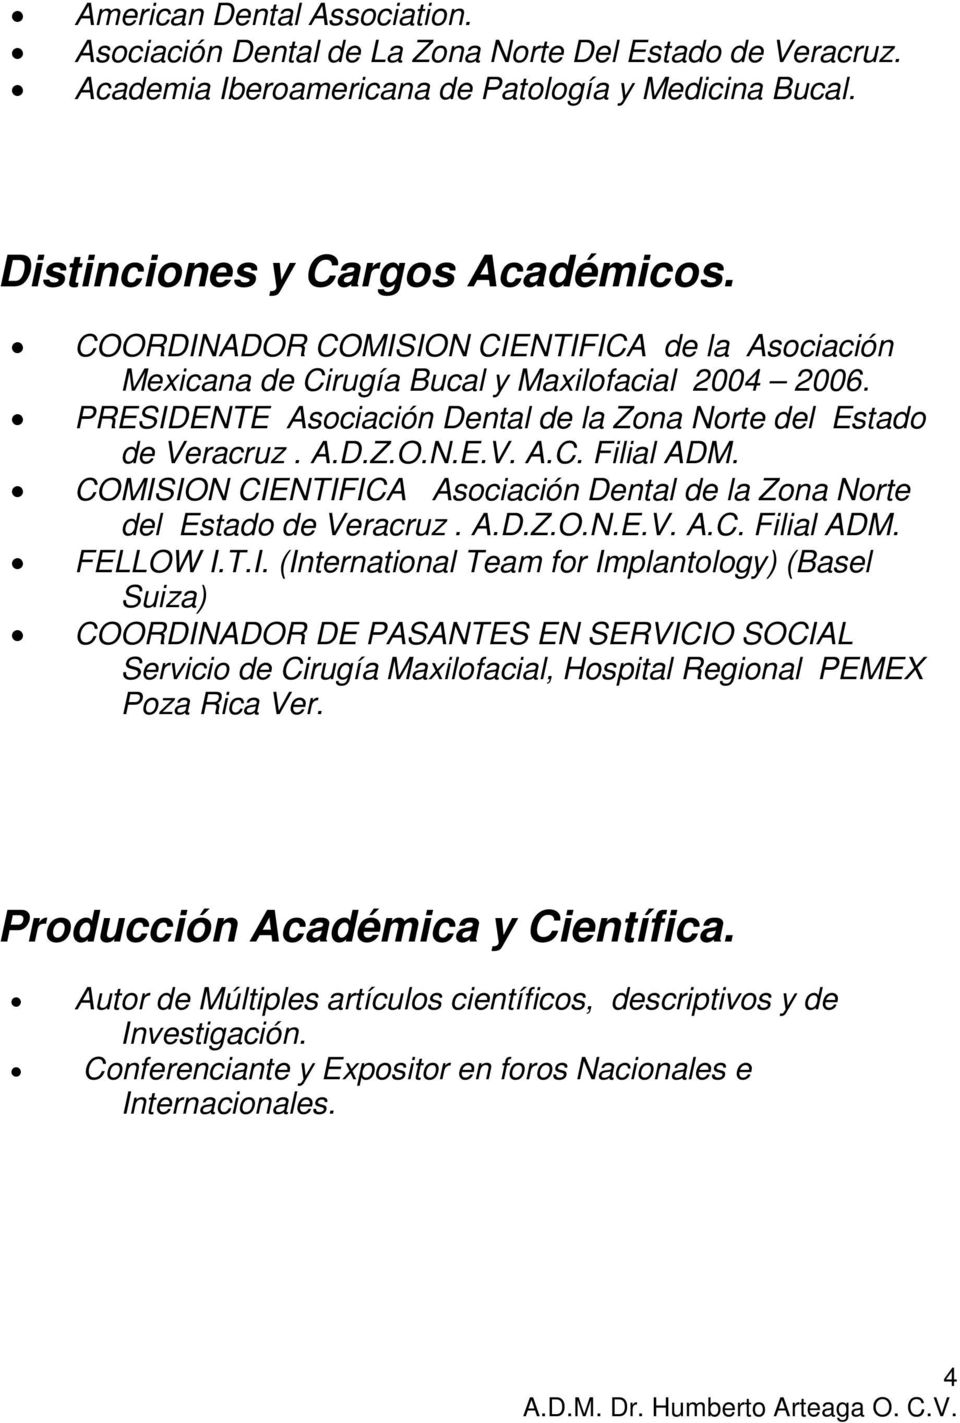 COMISION CIENTIFICA Asociación Dental de la Zona Norte del Estado de Veracruz. A.D.Z.O.N.E.V. A.C. Filial ADM. FELLOW I.T.I. (International Team for Implantology) (Basel Suiza) COORDINADOR DE PASANTES EN SERVICIO SOCIAL Servicio de Cirugía Maxilofacial, Hospital Regional PEMEX Poza Rica Ver.